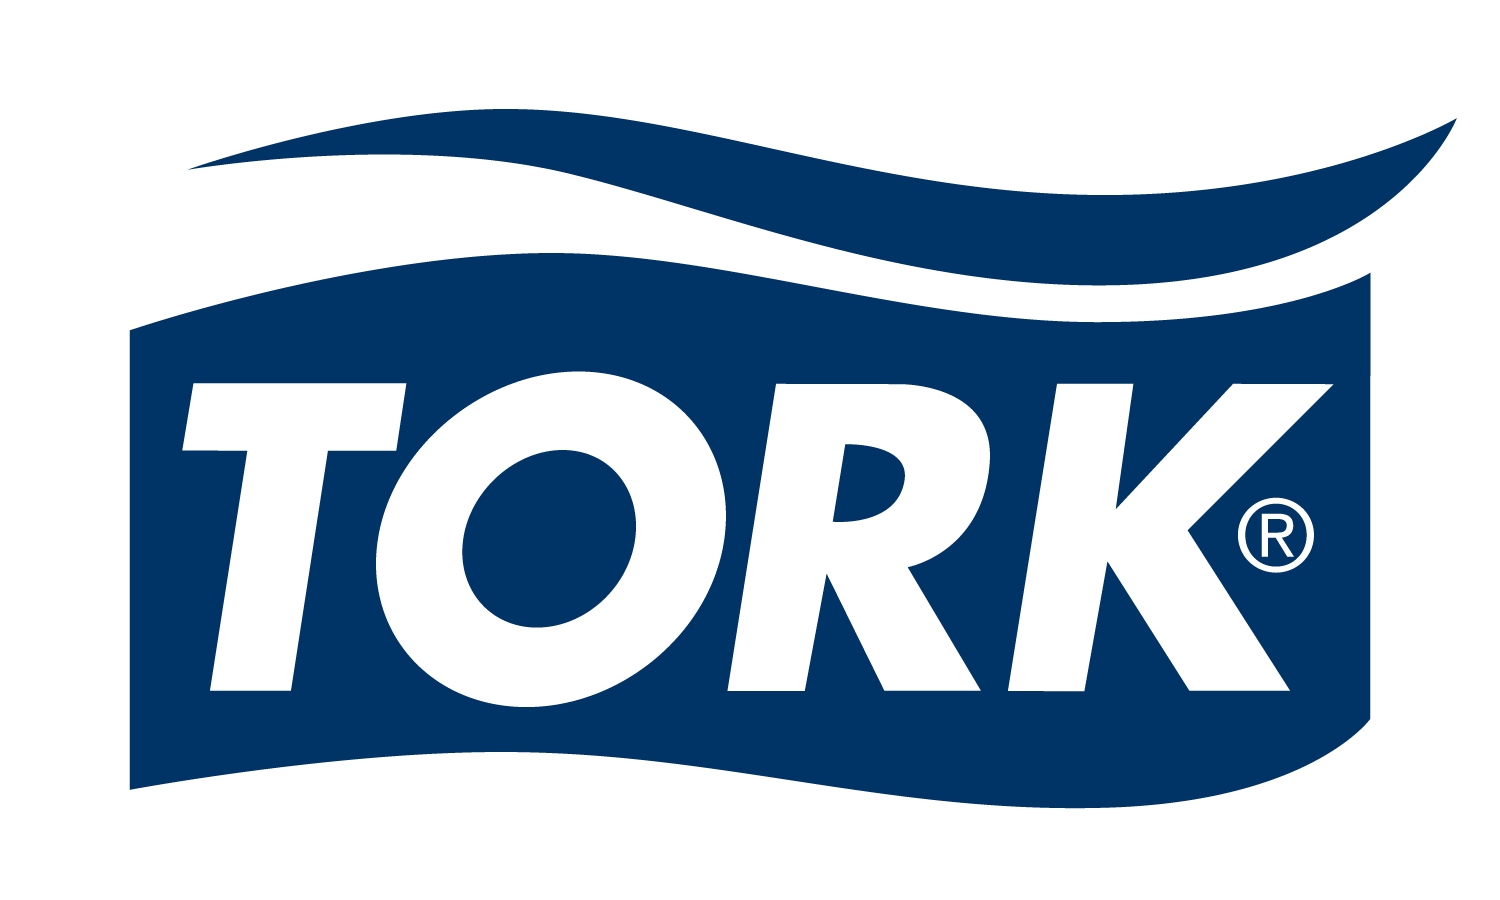 Tork_logo.jpg